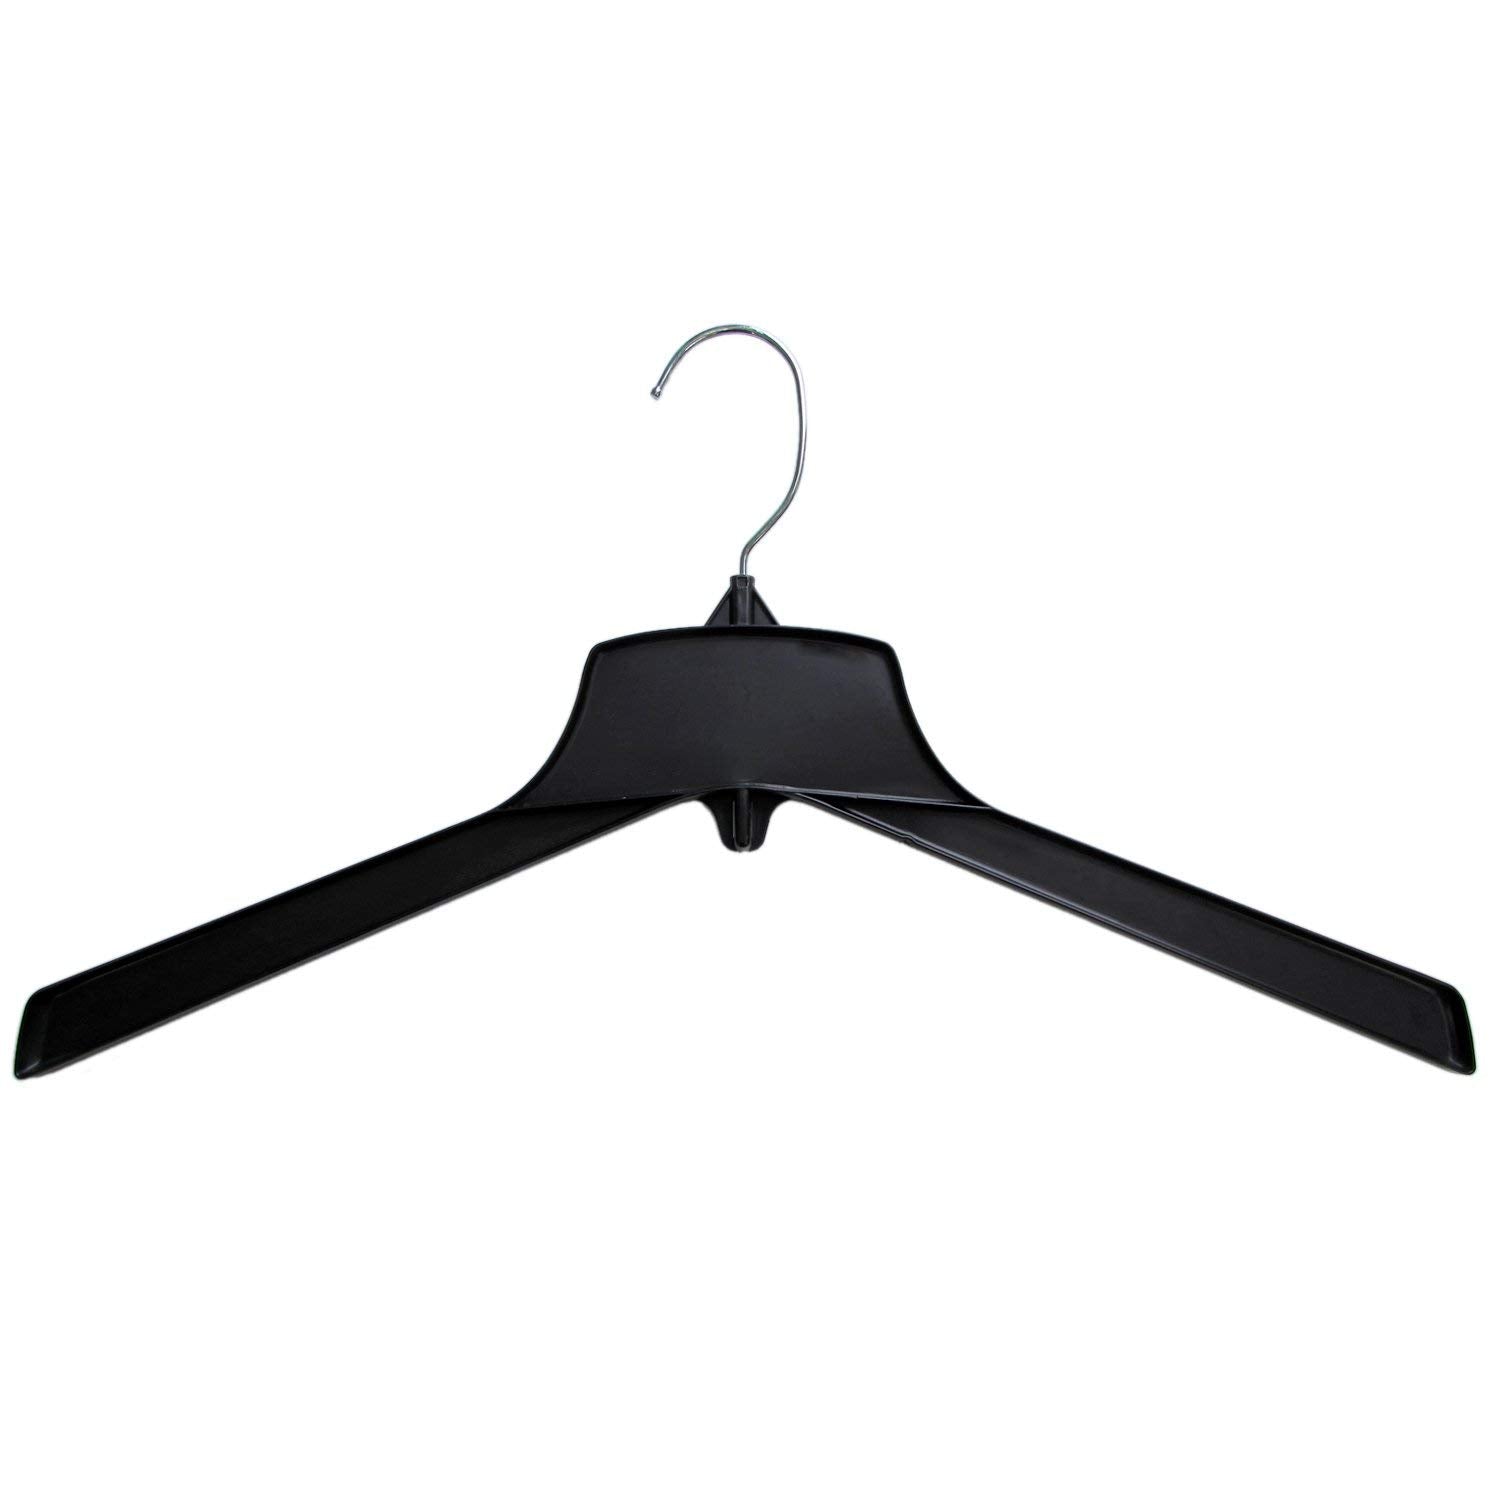 Hanger Central Heavy-Duty Black Plastic Closet Department Store Coat Hangers, 15 Inch, 50 Pack